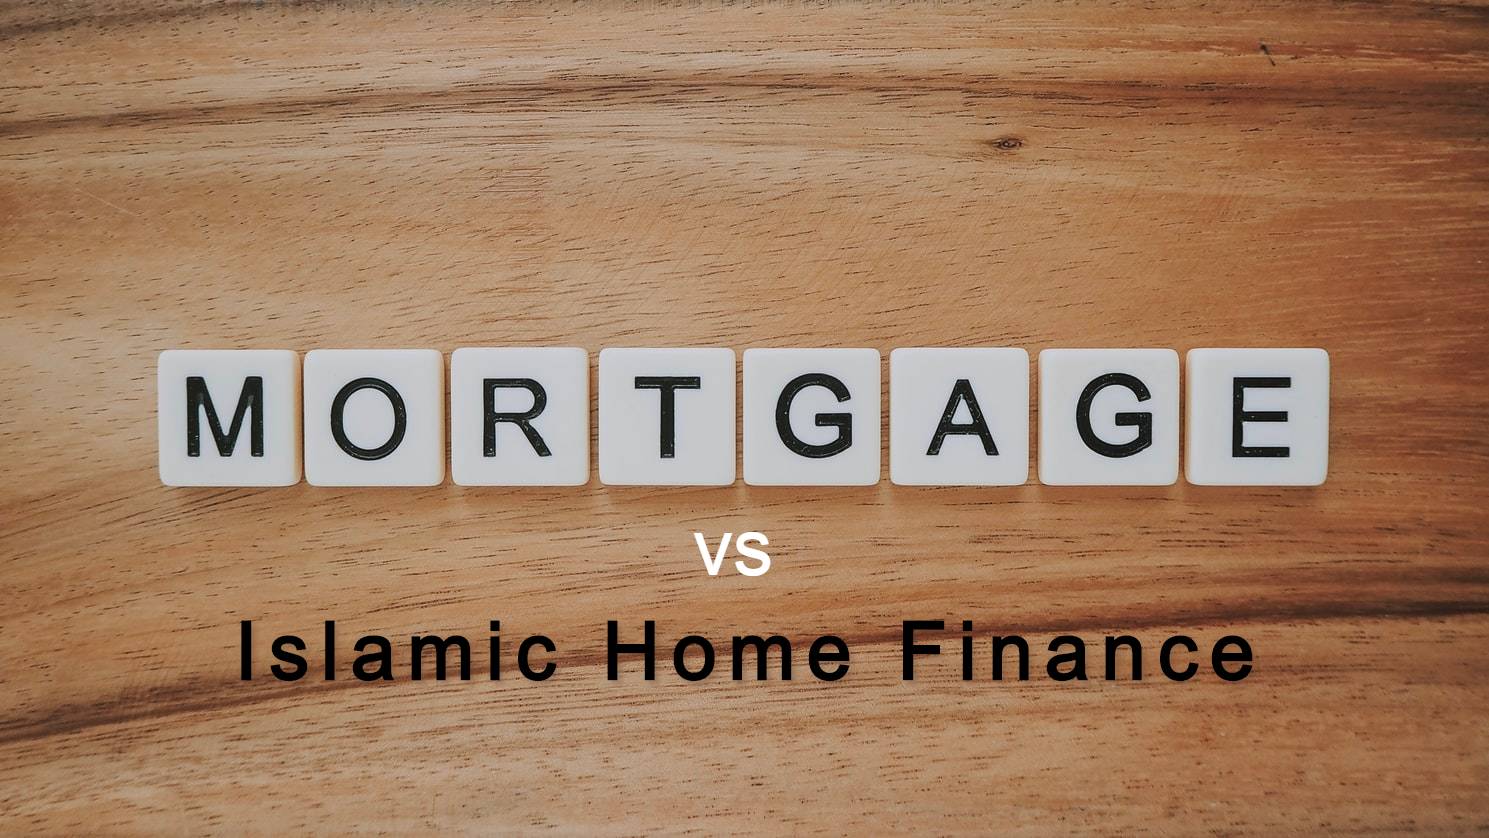 Islamic Home Finance Vs Mortgage Loans